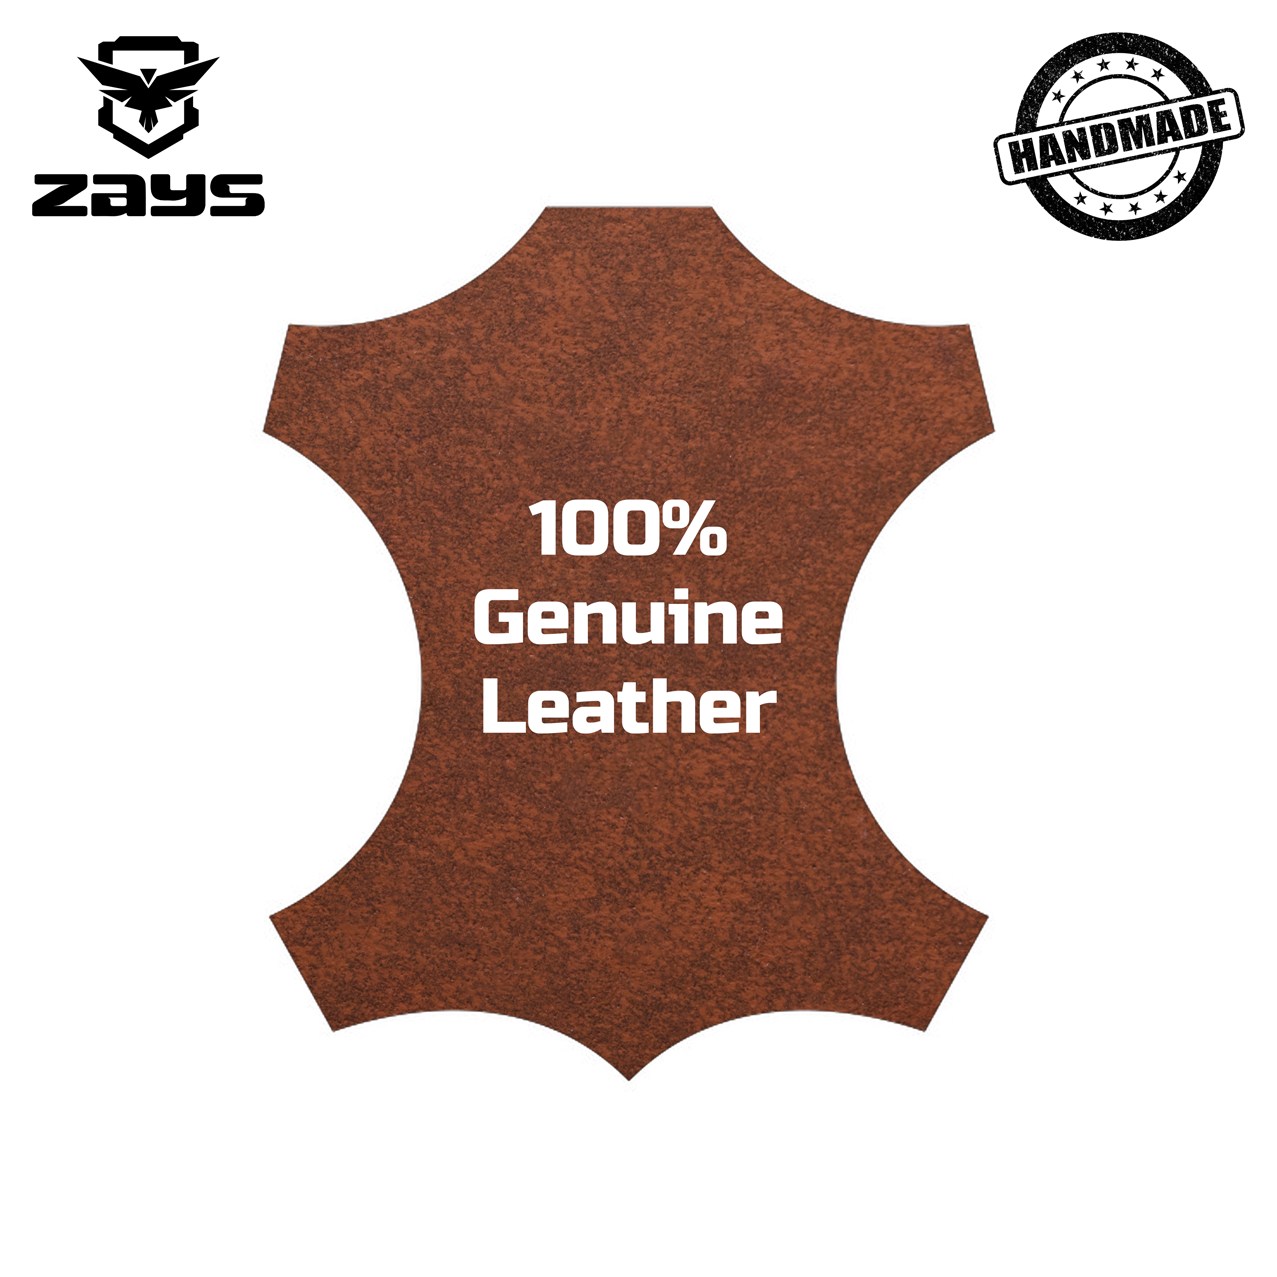 Zays Leather Premium Formal Shoe For Men (Black) - SF55